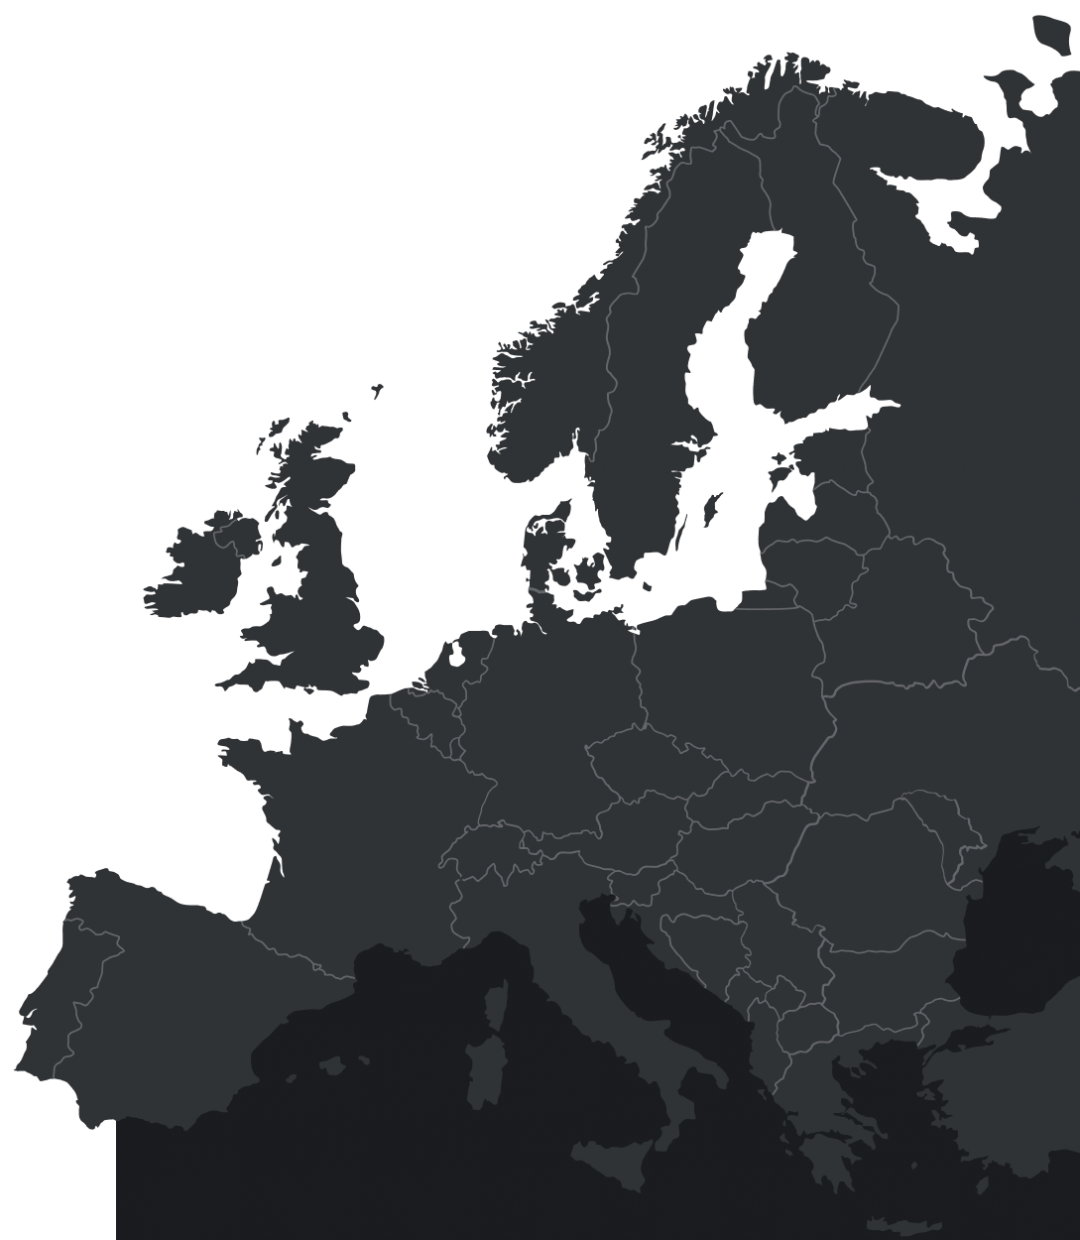 Europe map hotspots - Export